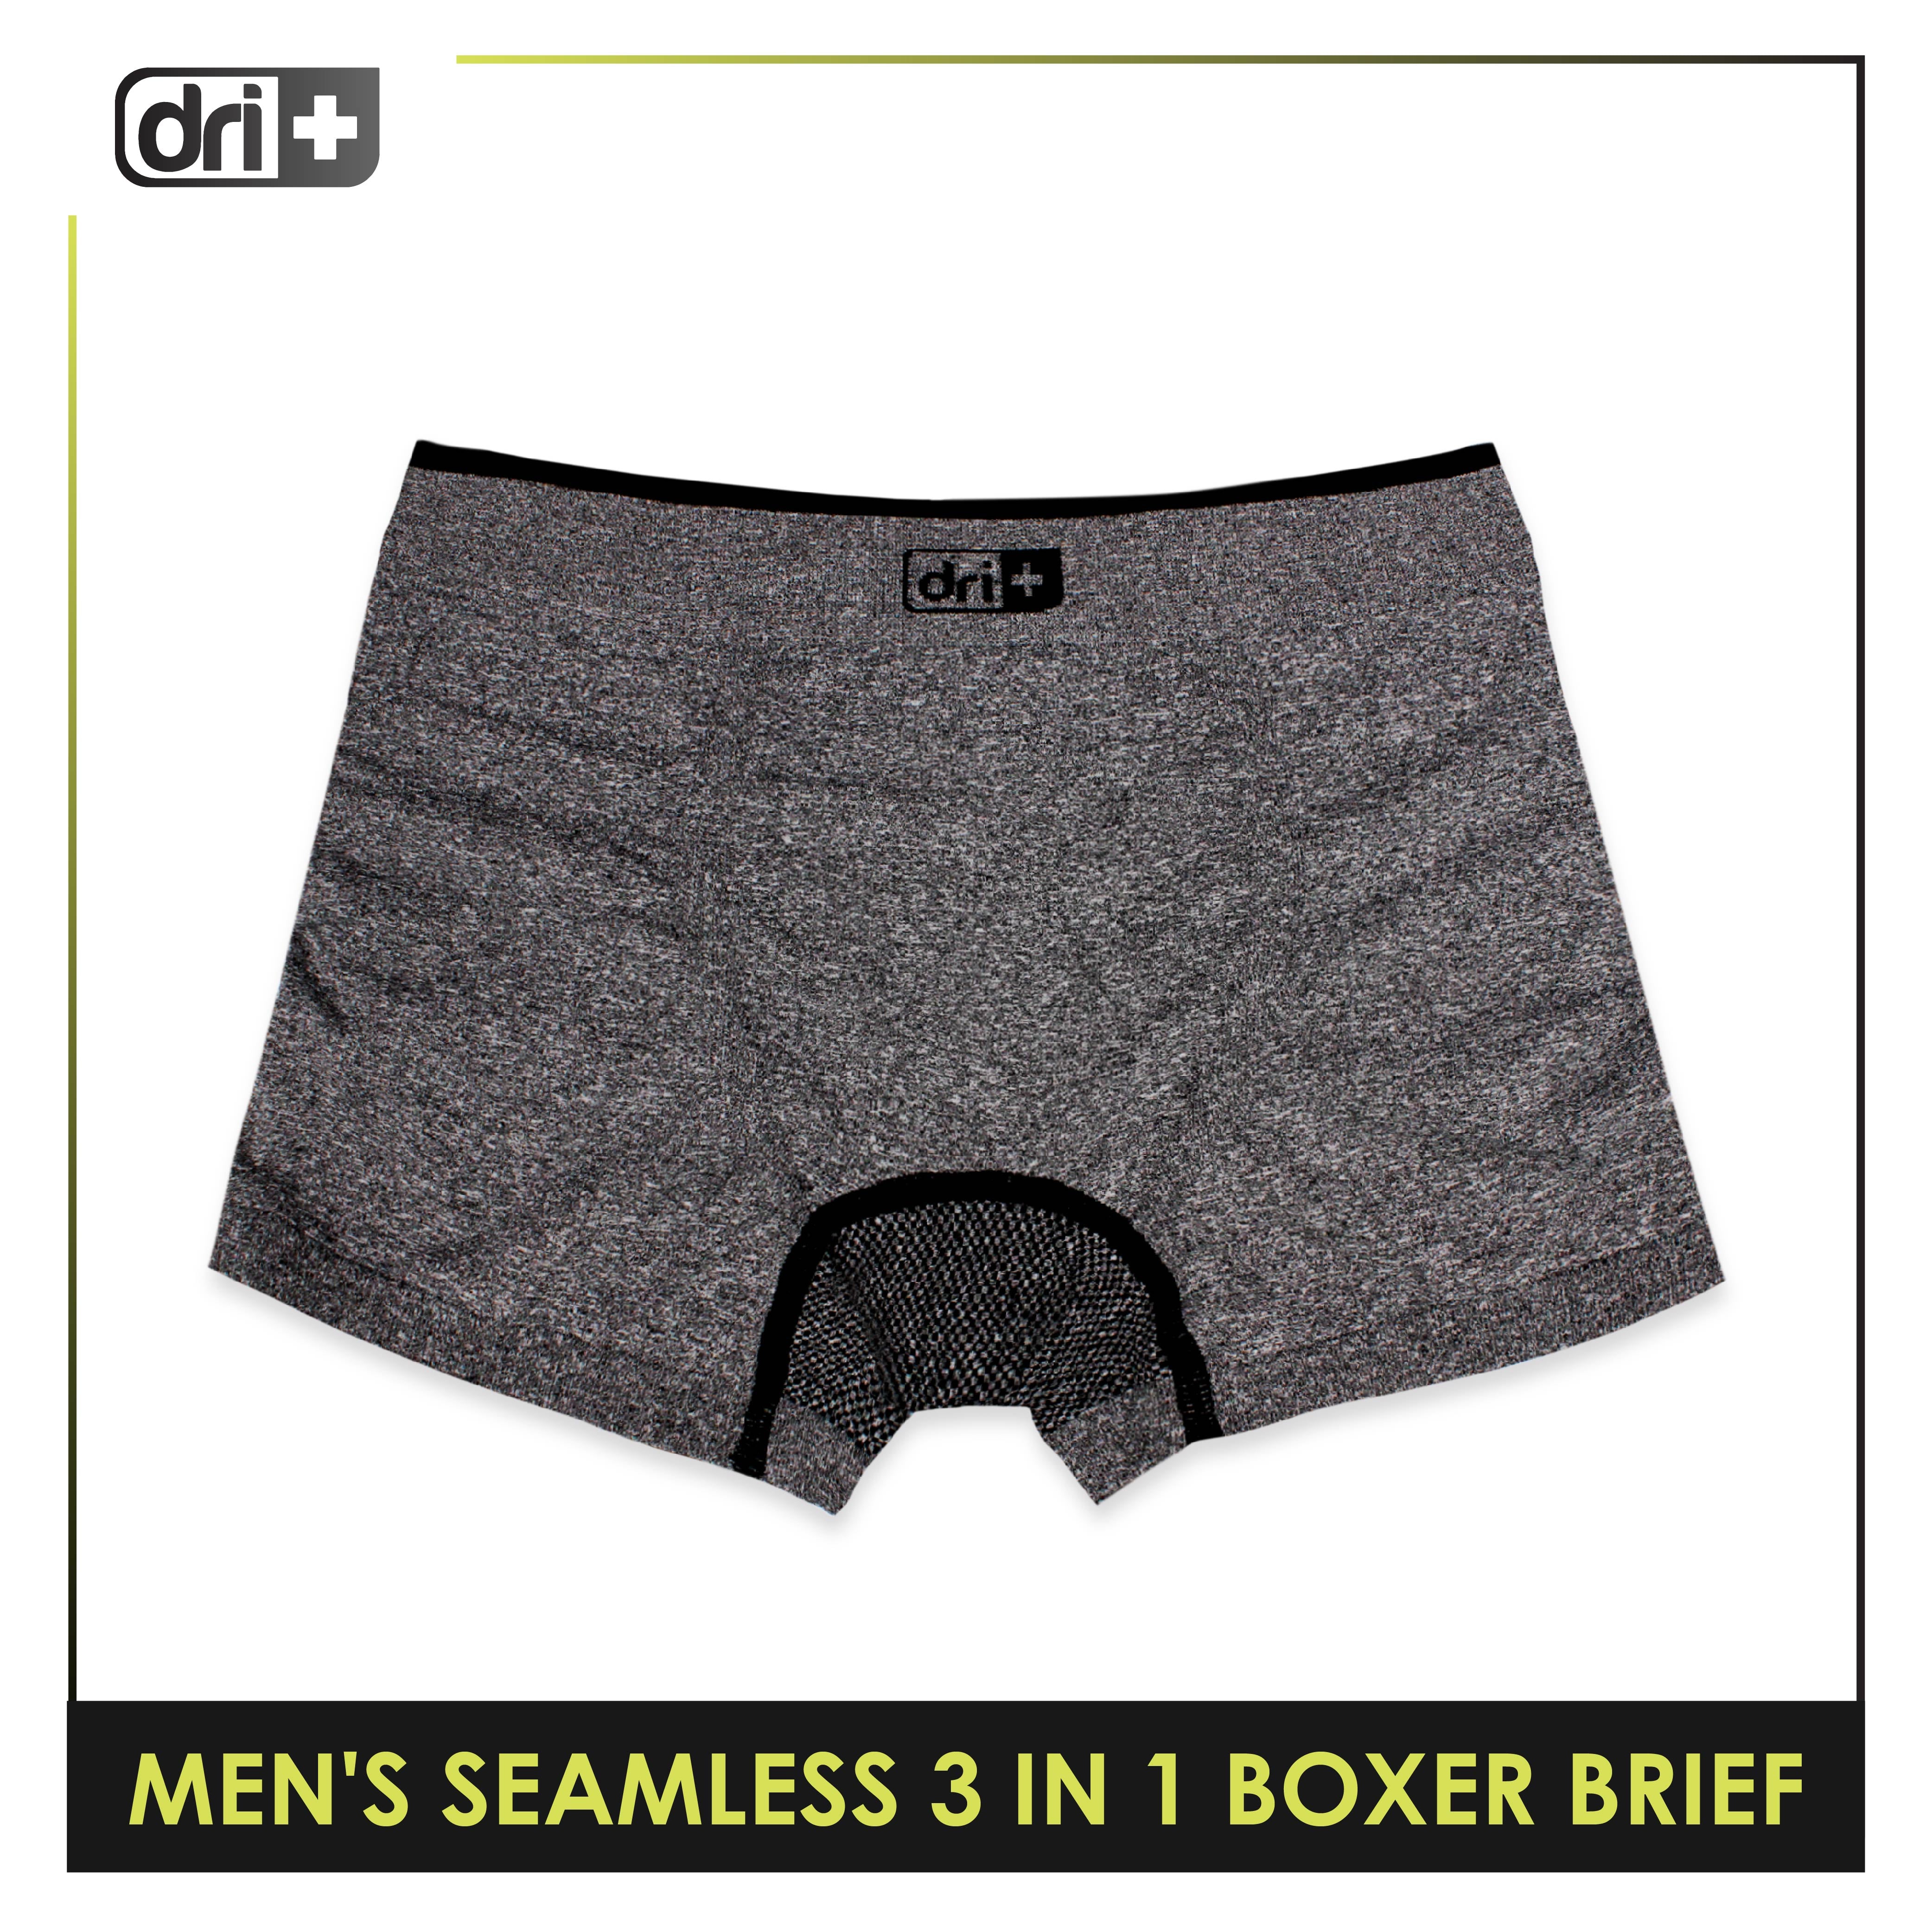 wolf Depressie schaamte Dri Plus Men's Seamless Sports Boxers Brief 3 pieces in a pack ODMBBG1101 –  burlingtonph